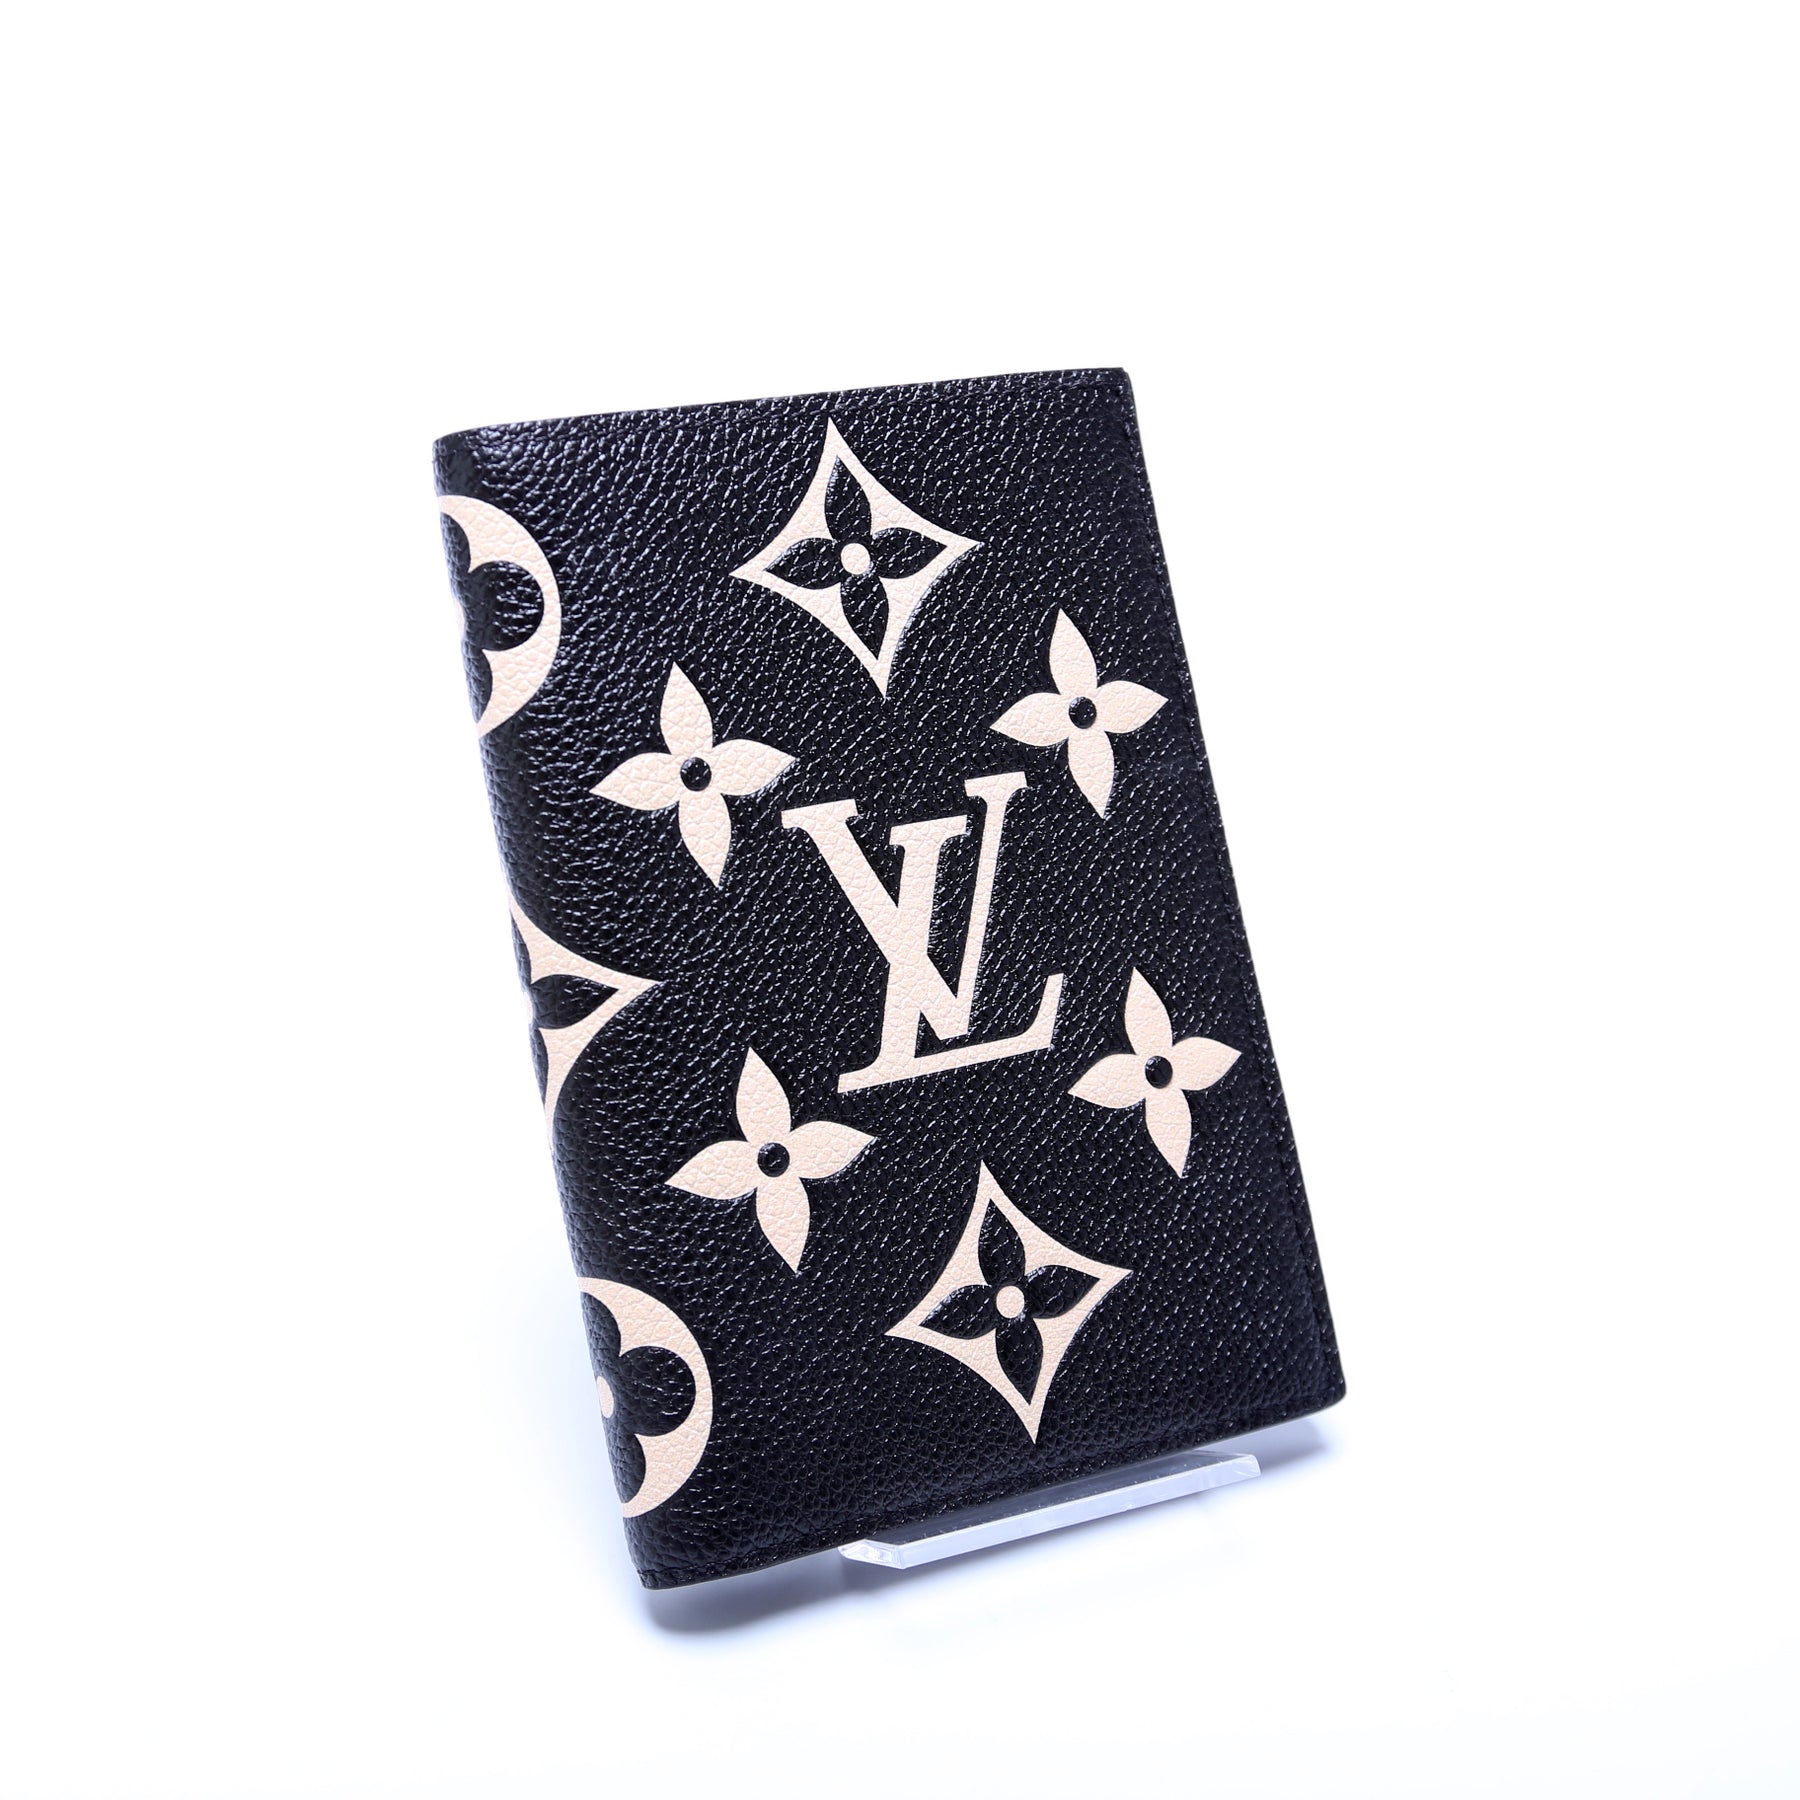 Preowned Authentic Louis Vuitton Monogram Passport Cover